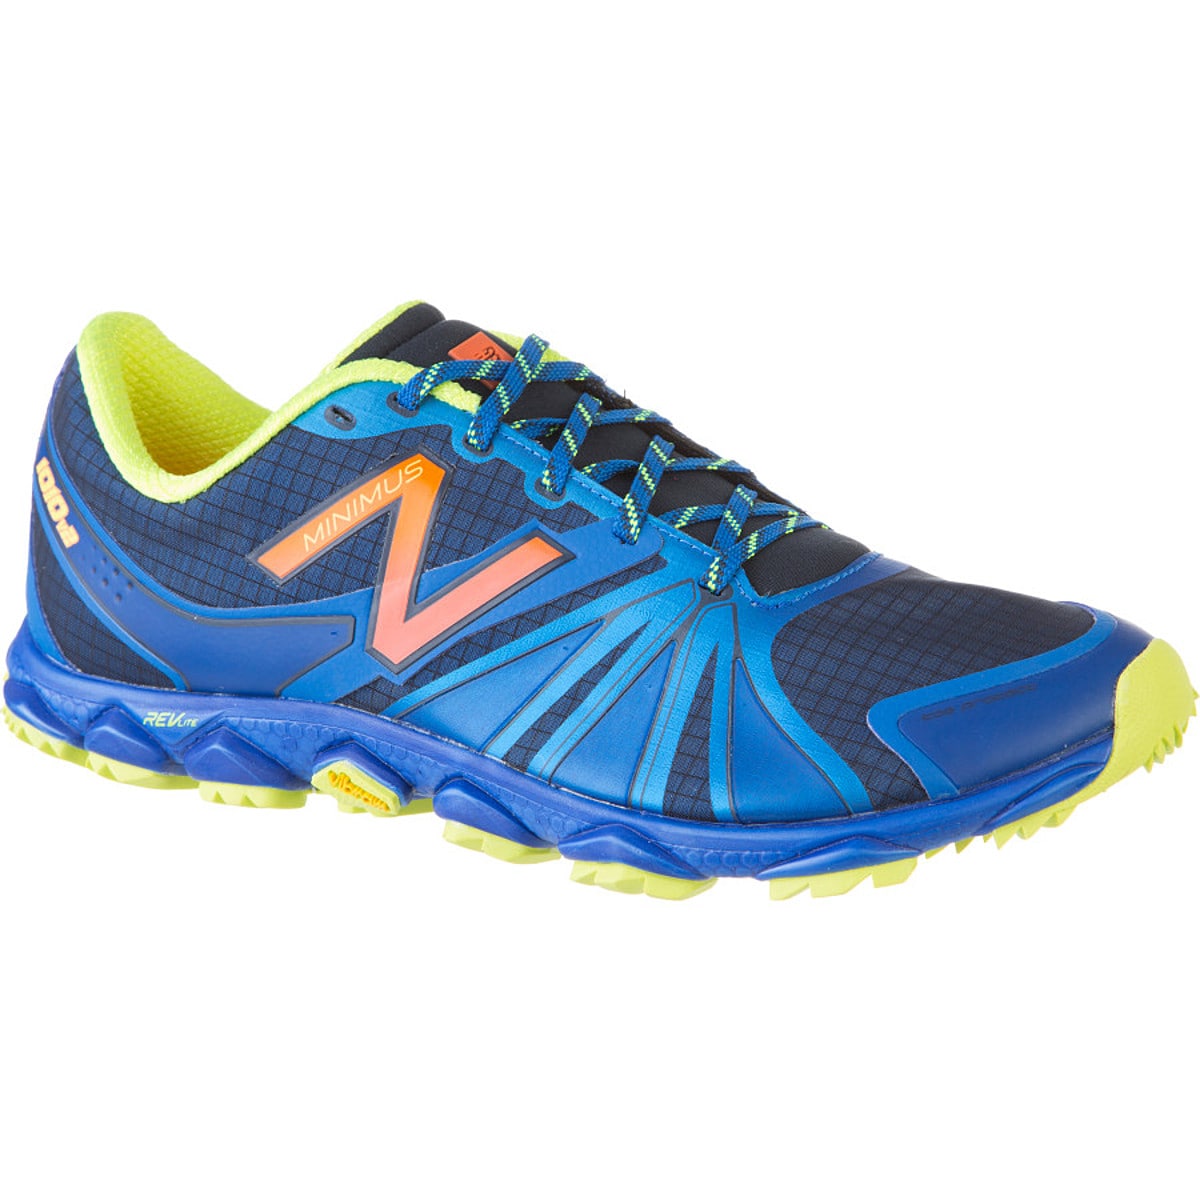 New MT1010v2 Minimus Trail Running Shoe - Men's - Footwear